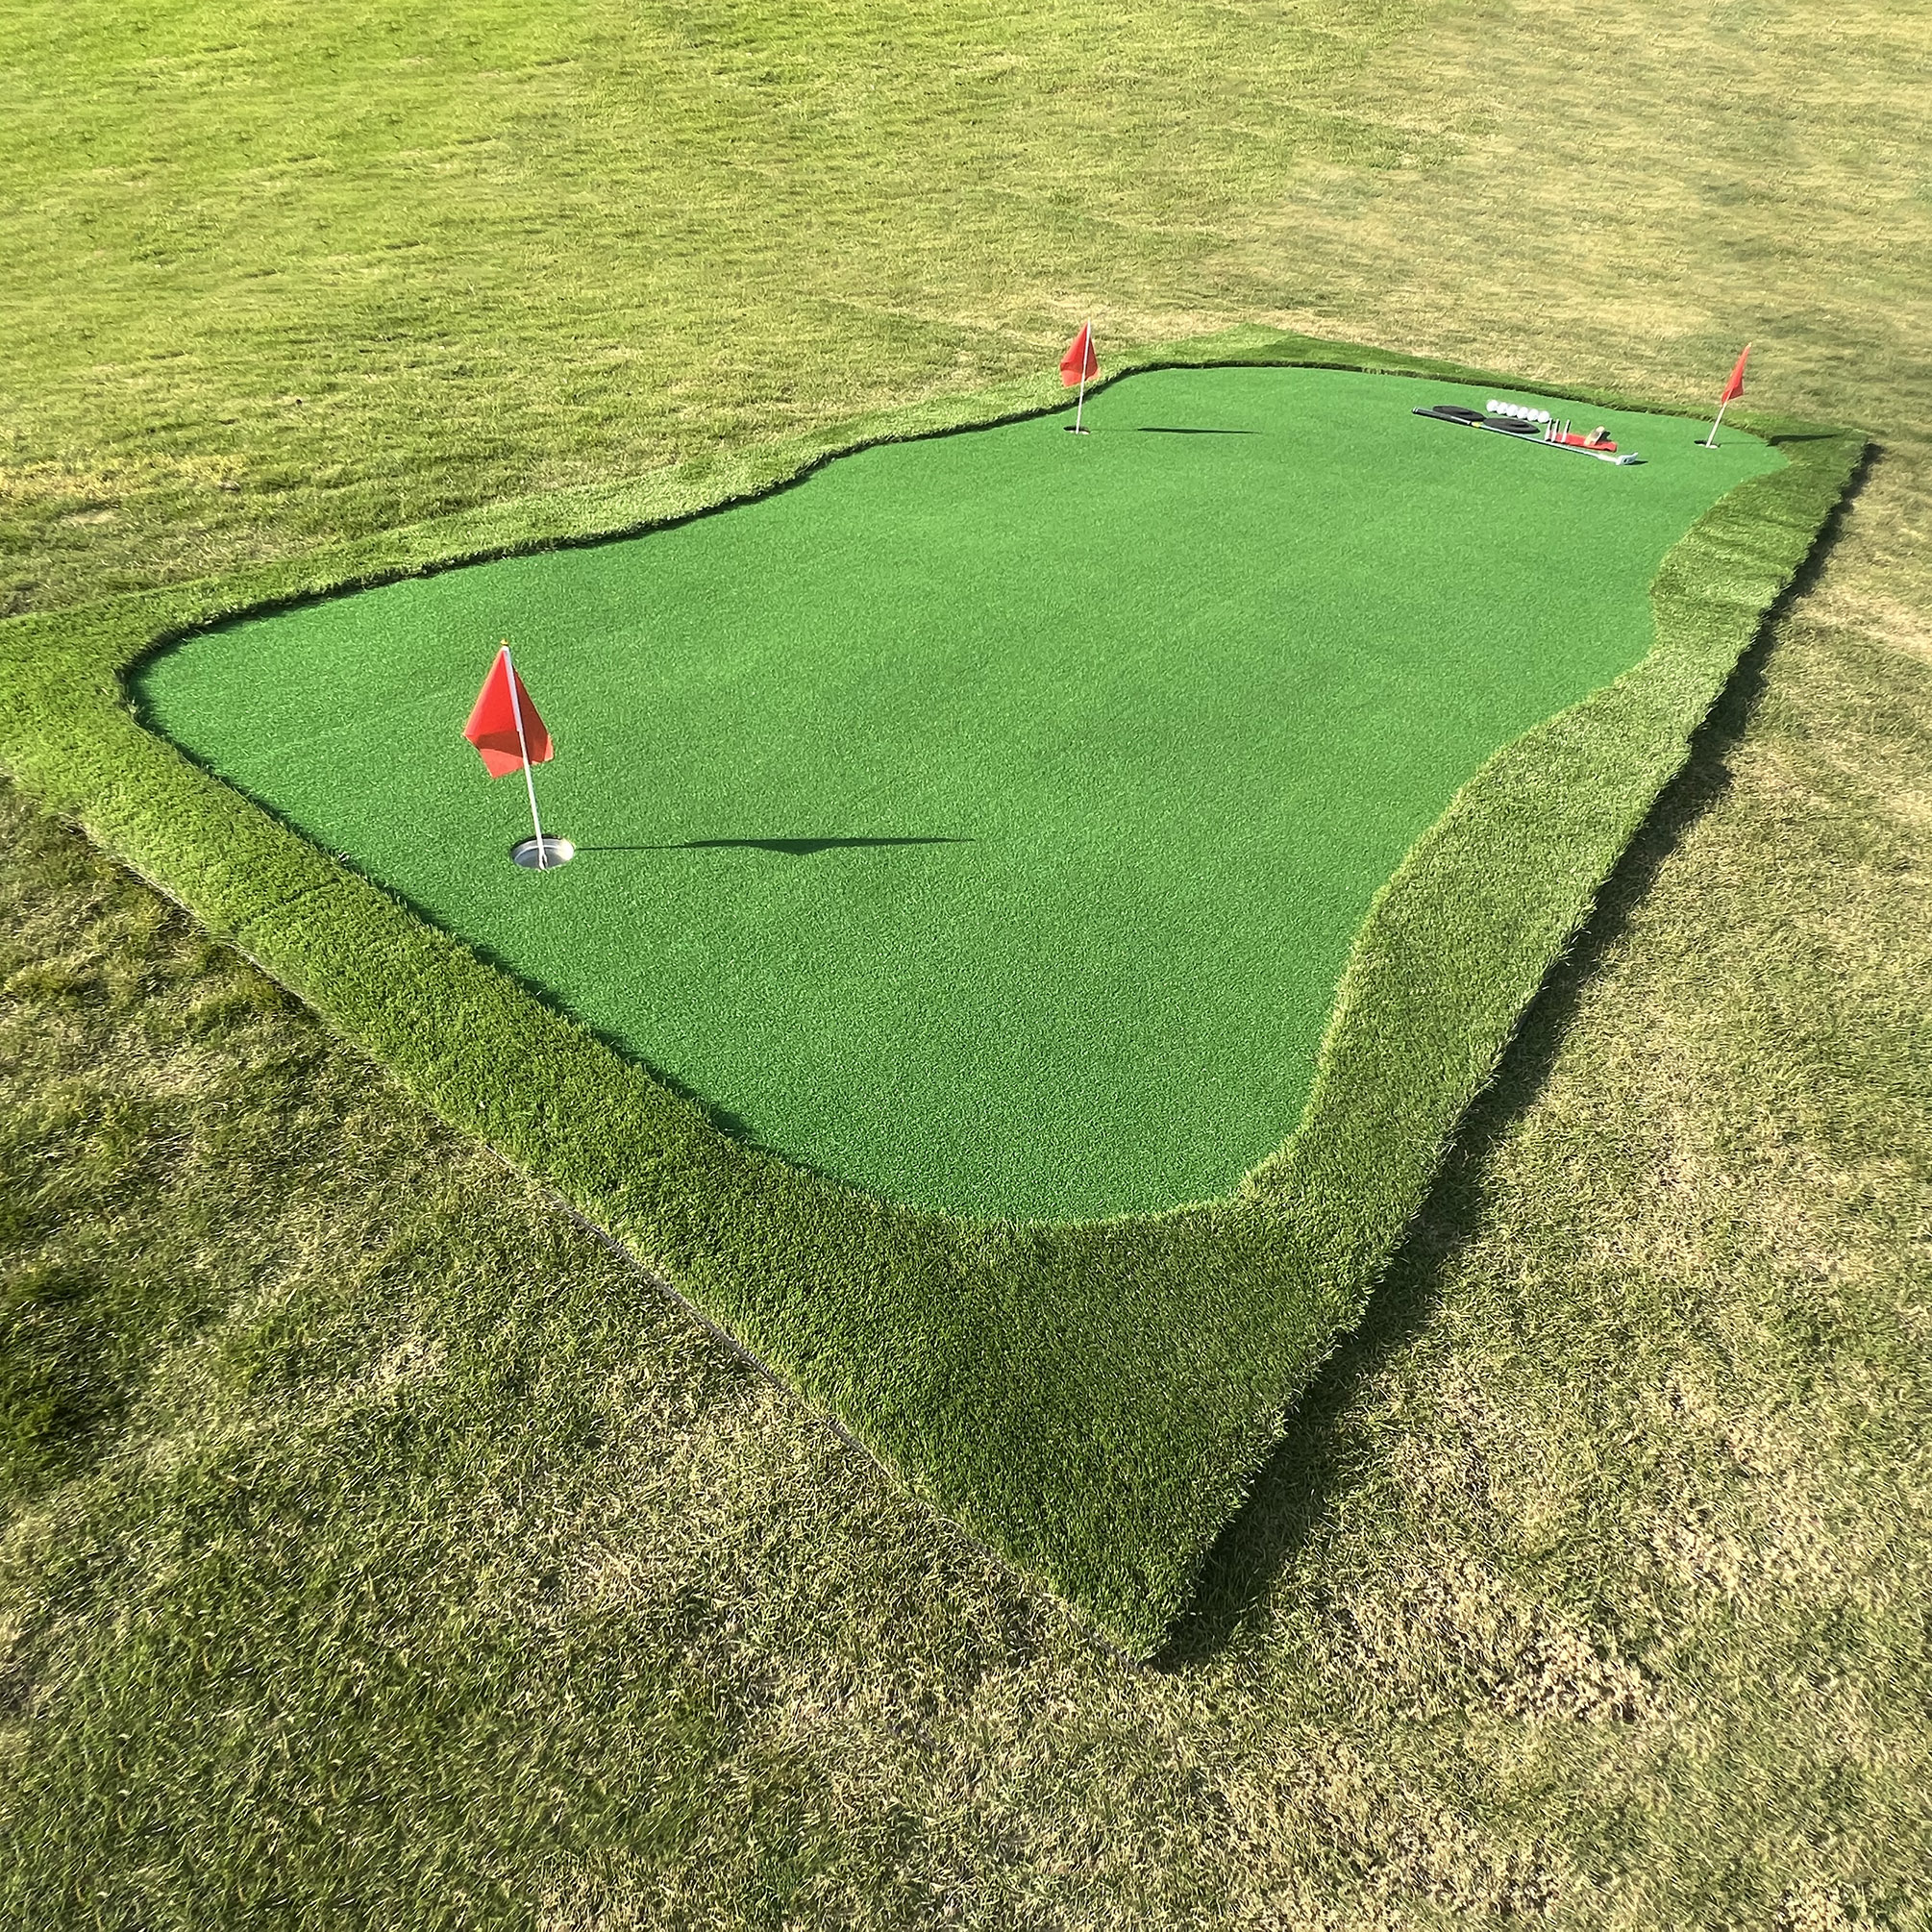 FixtureDisplays 20 X 10 Feet Premium Golf Mat Set, Artificial Turf Golf Practice Mats with 6 Golf Balls and A Professional Golf Clubs